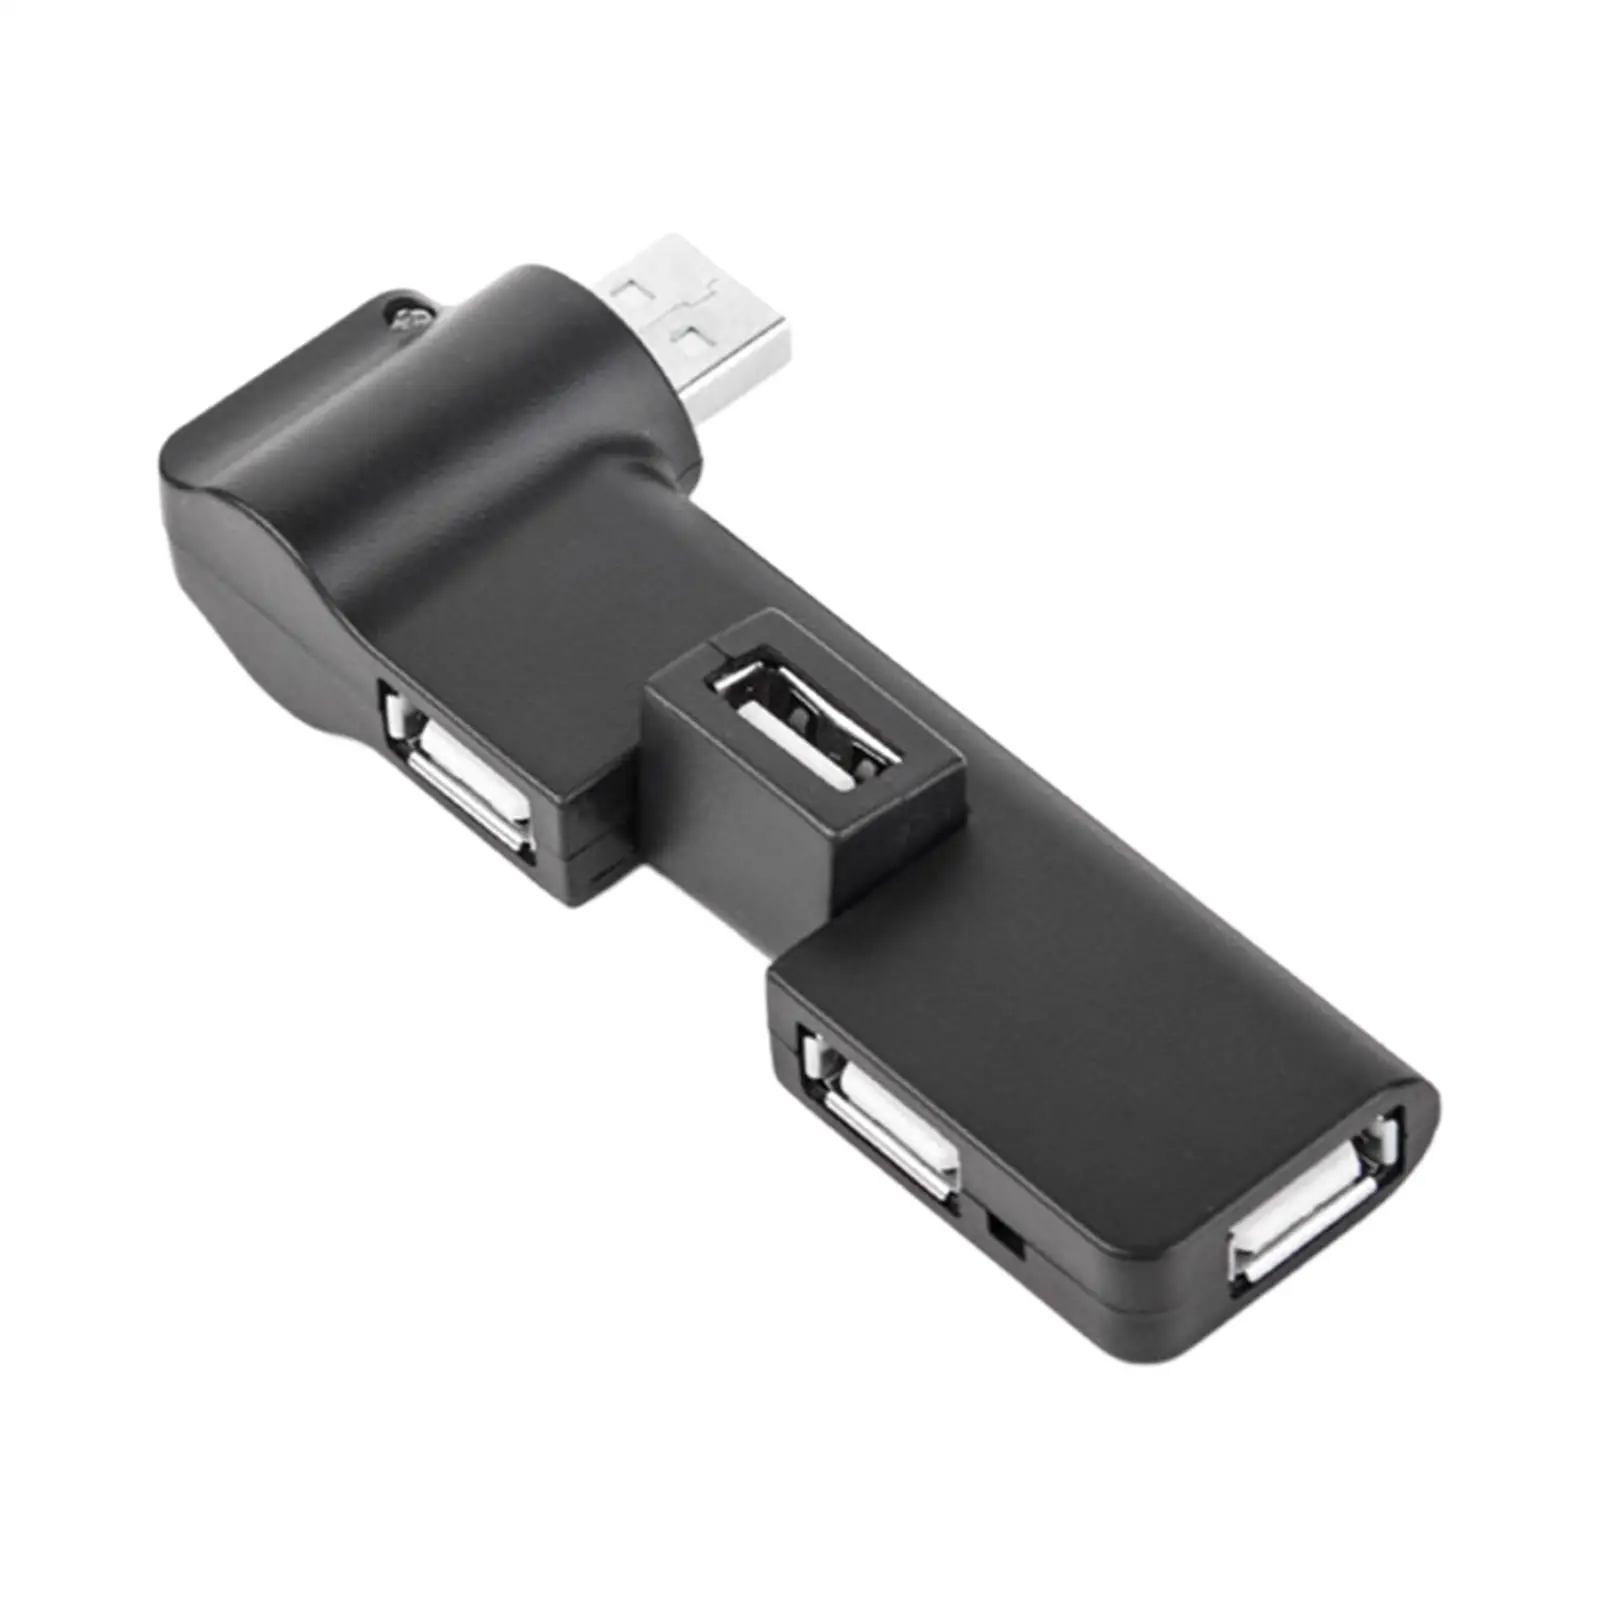 4 Port USB Hub 90/180 Degree Rotatable Plug and Play USB Port Splitter for Hand Painted Board Printer Digital Camera